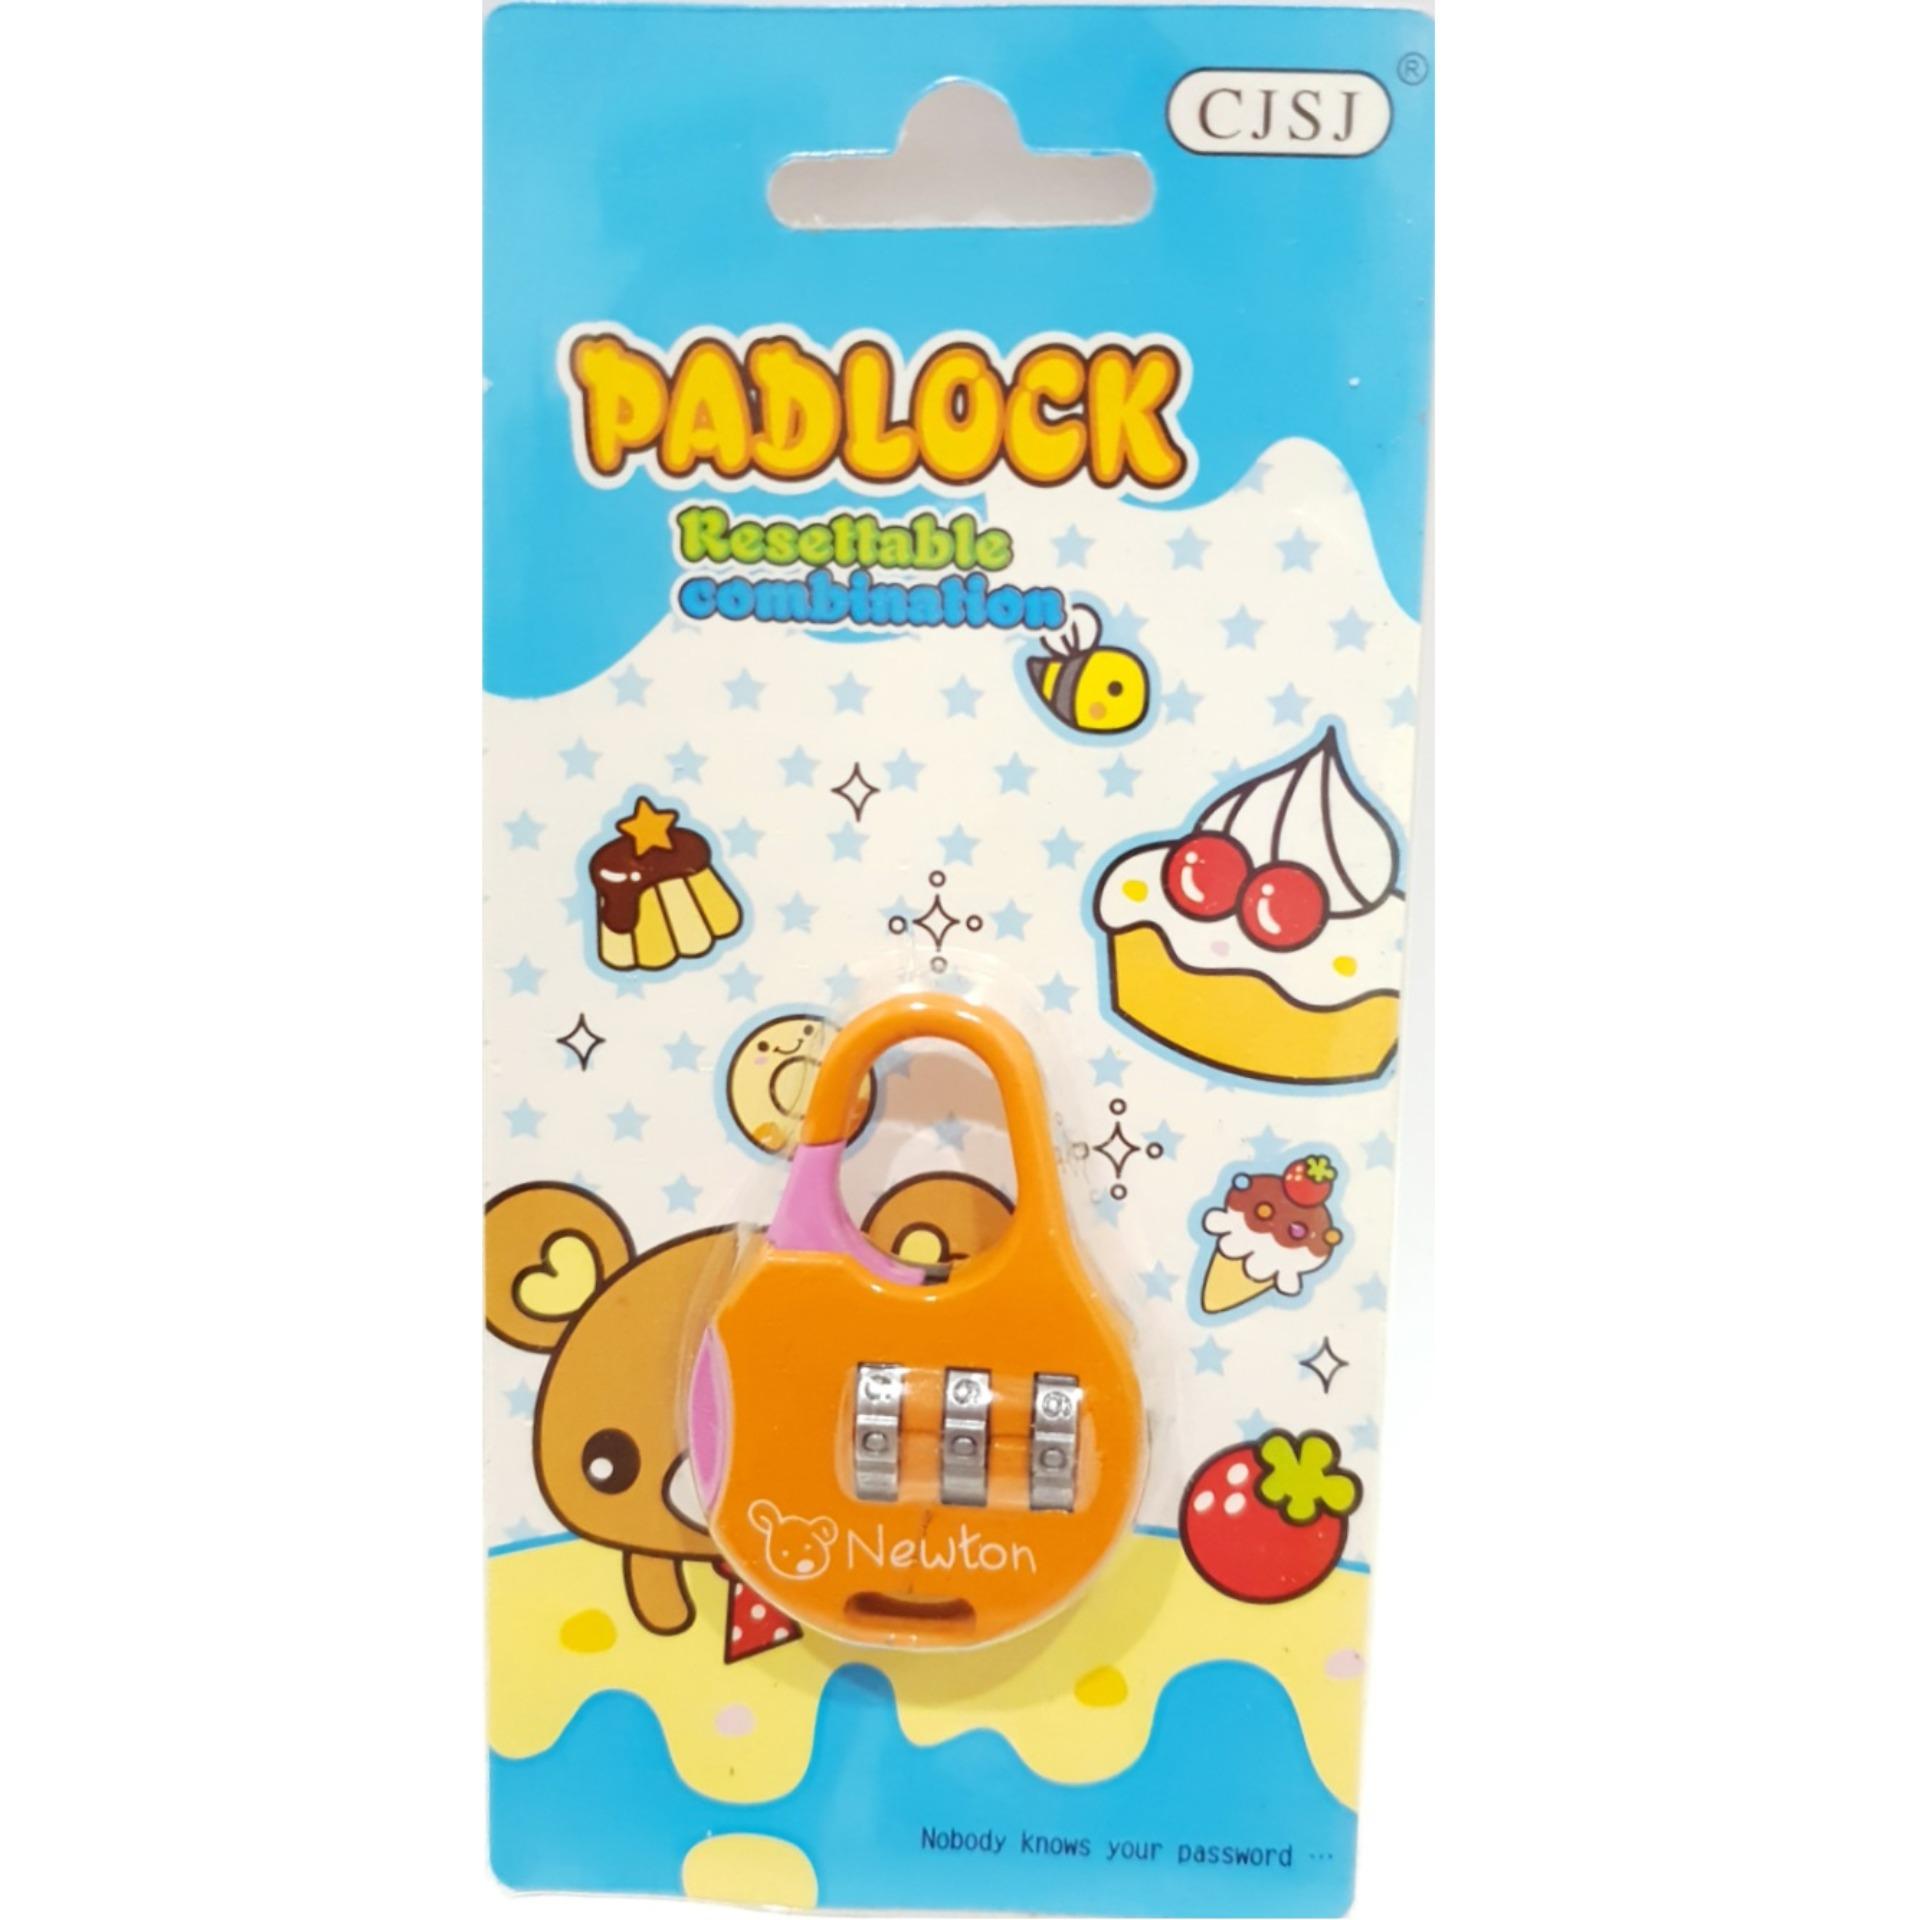 Padlock - กุญแจล๊อคกระเป๋า CJSJ